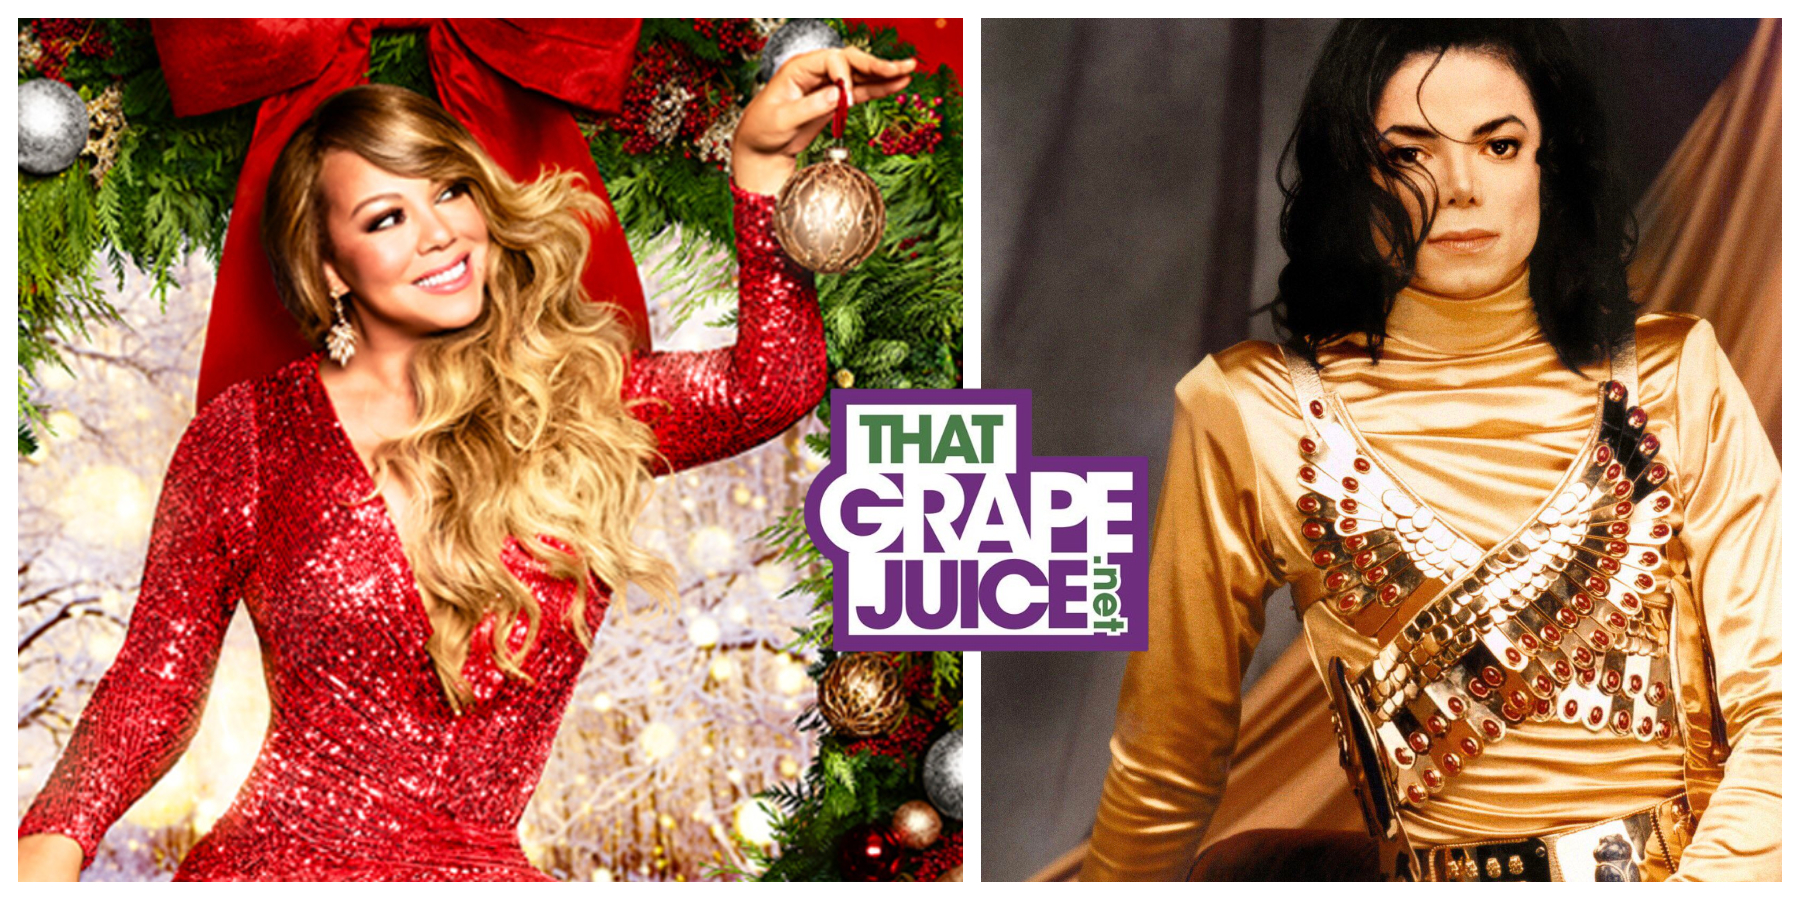 RIAA: Mariah Carey Breaks Michael Jackson’s Singles Sales Record As ‘All I Want for Christmas’ Reaches 14x Platinum